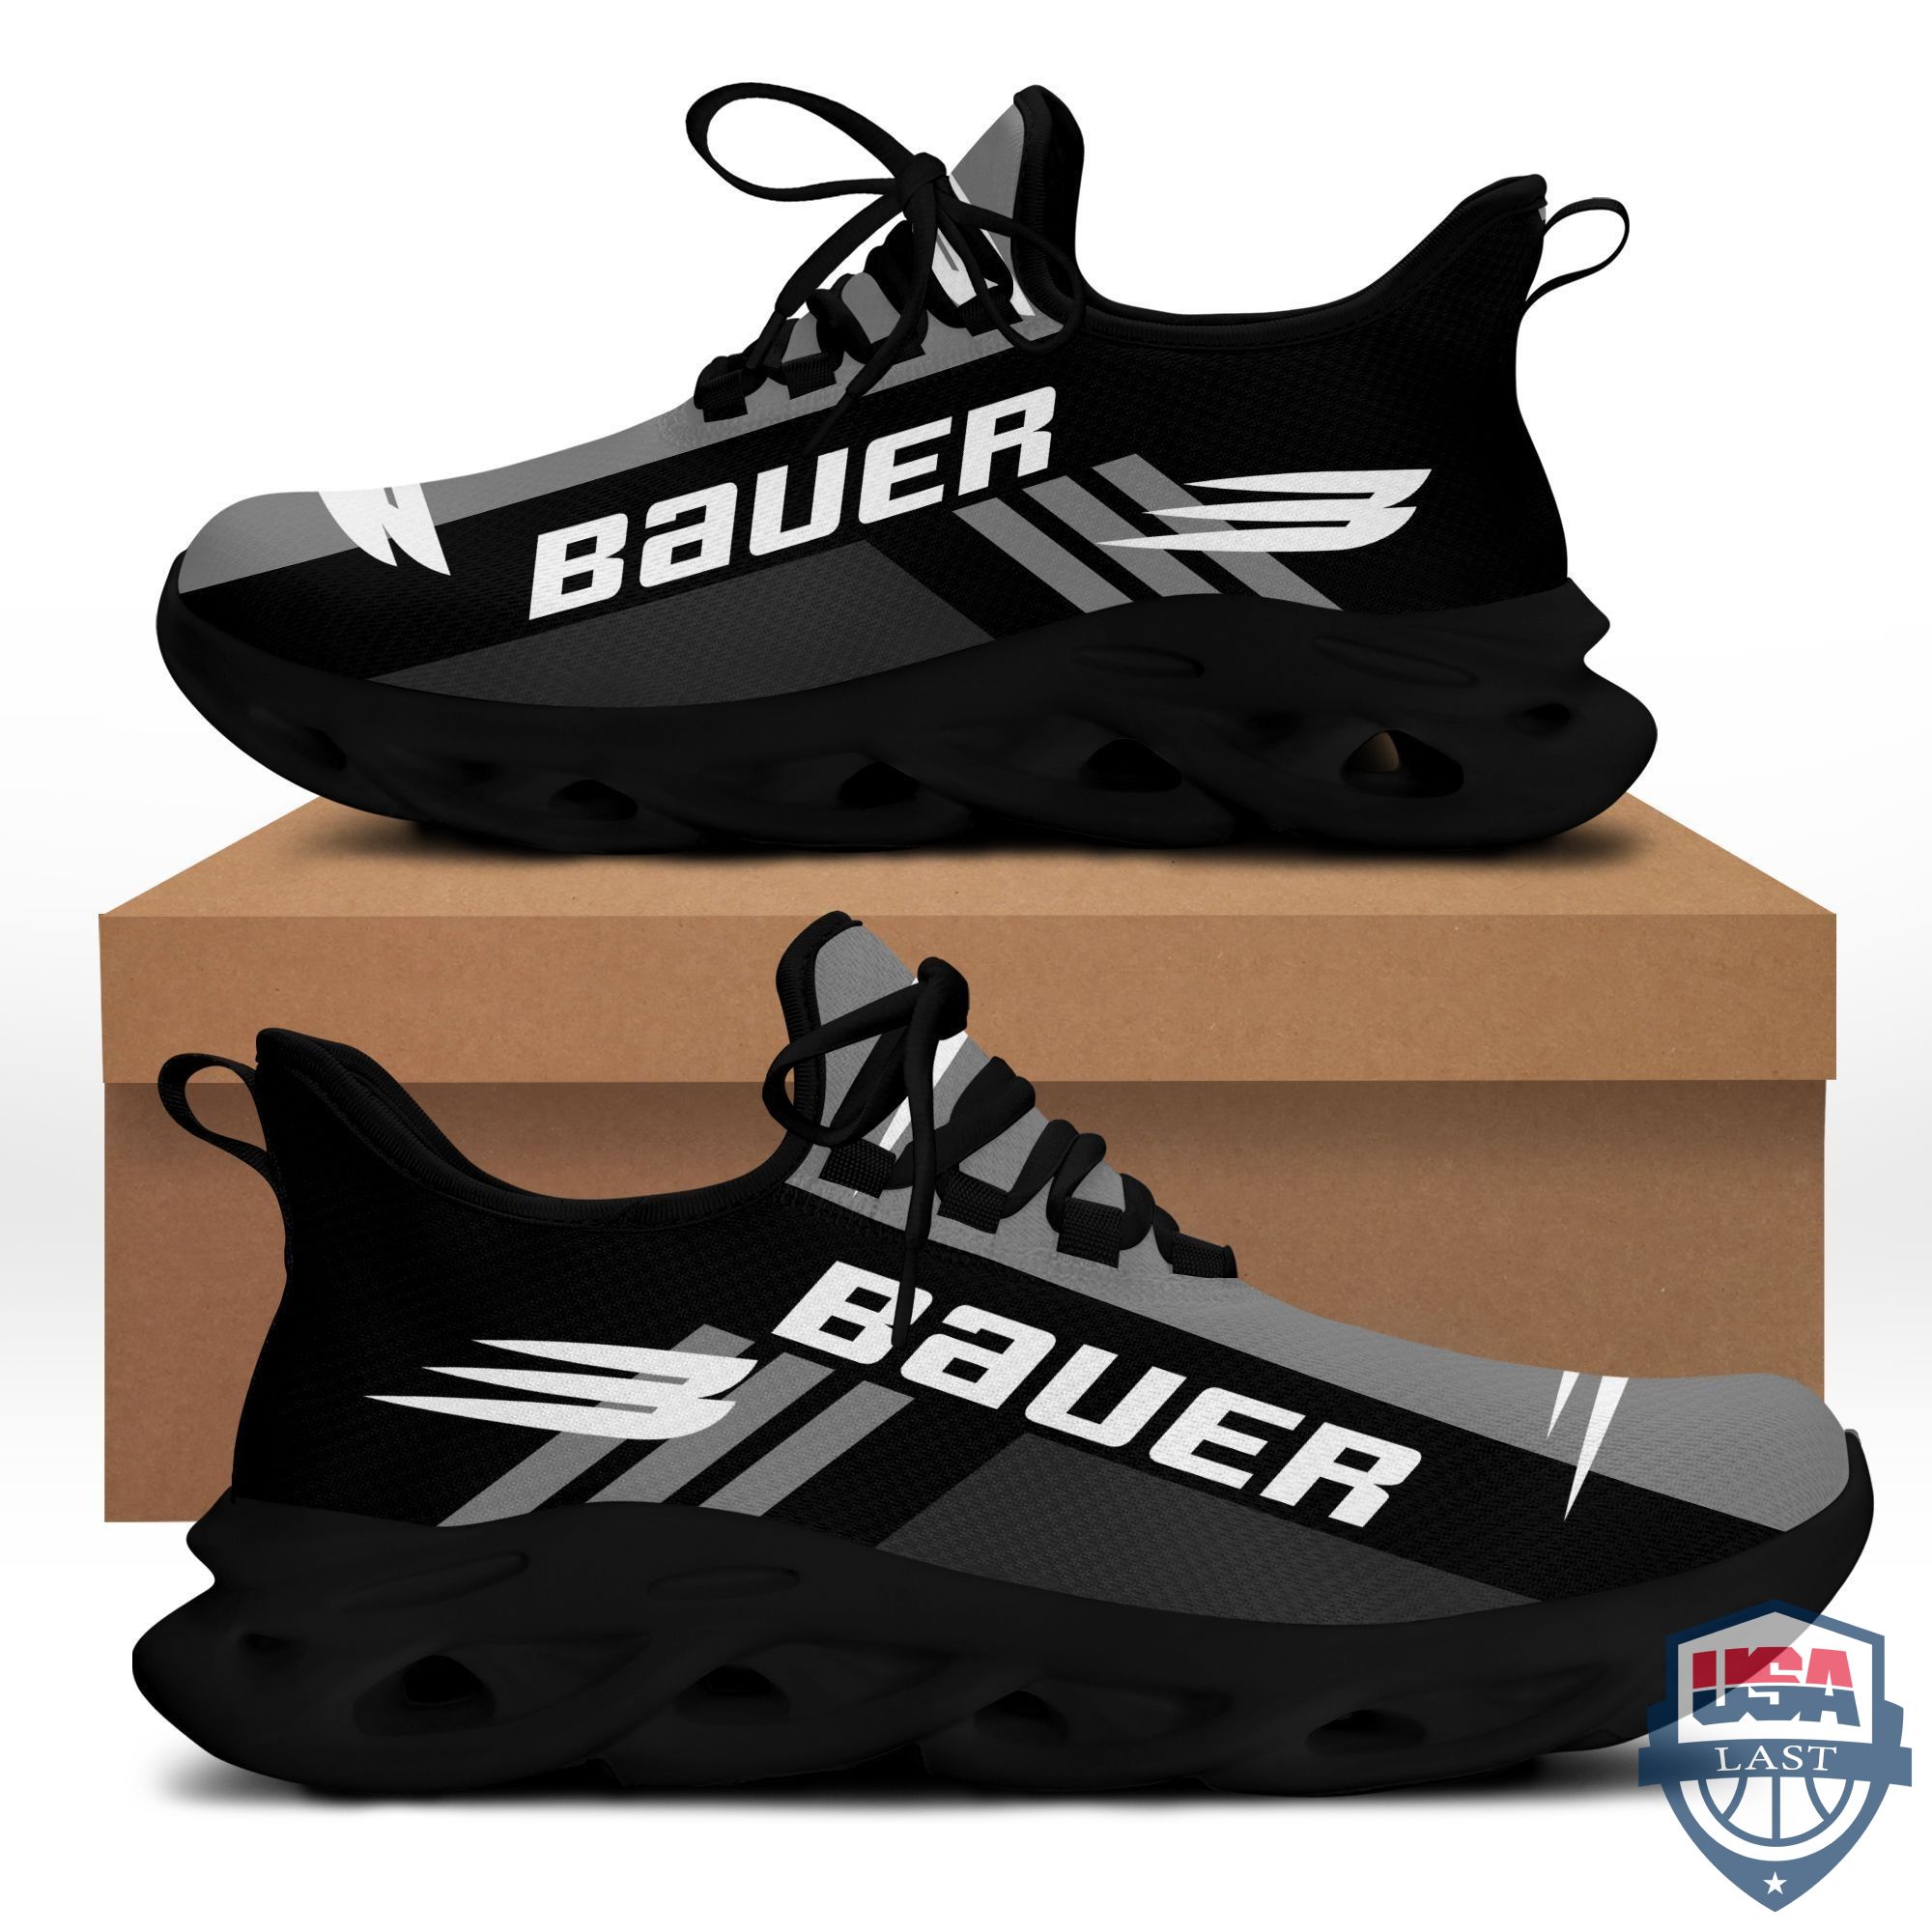 Top Trending – Bauer Max Soul Shoes Grey Version